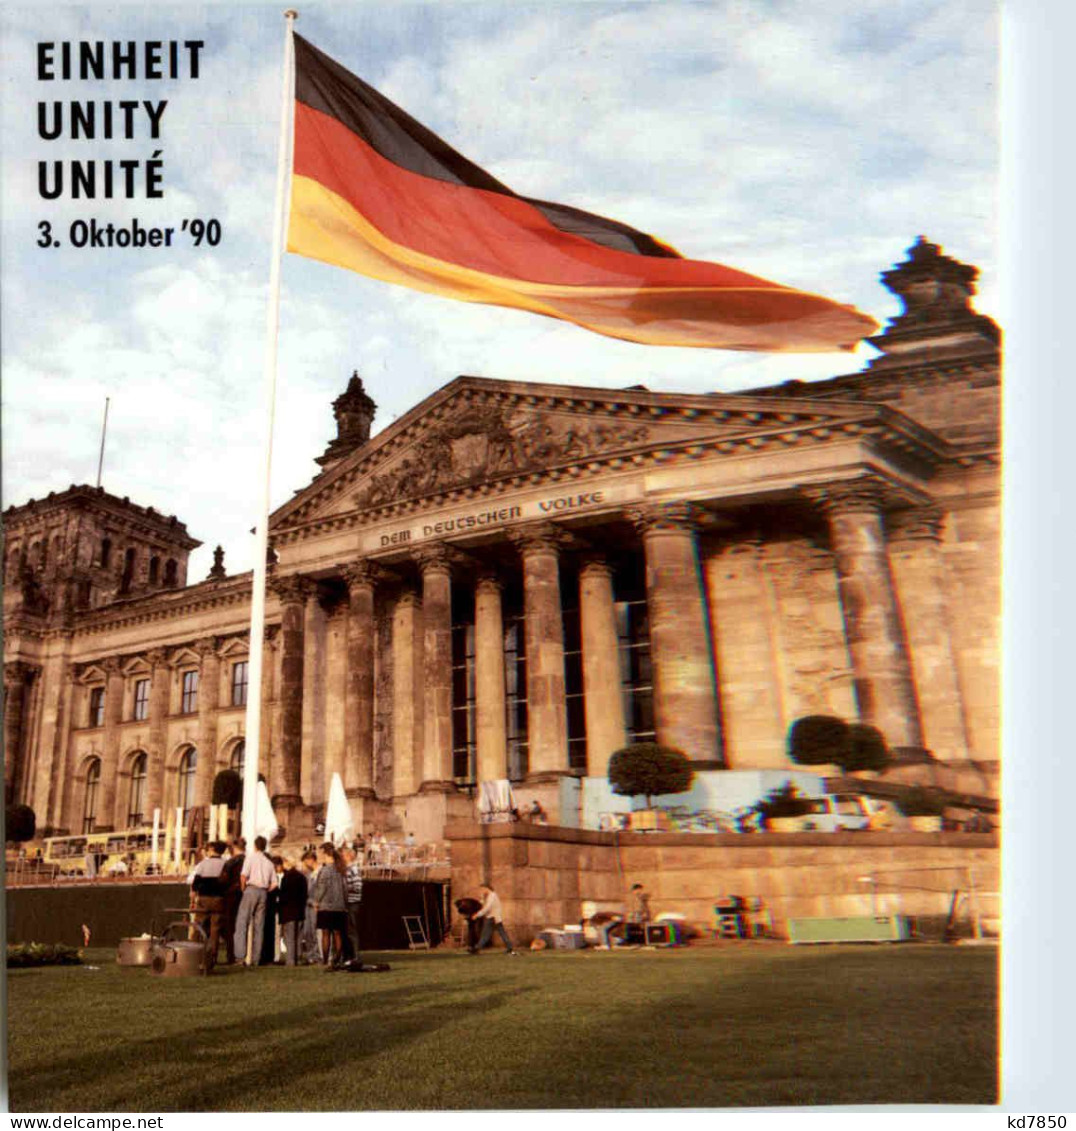 Einheit - Berlin - Berlin Wall